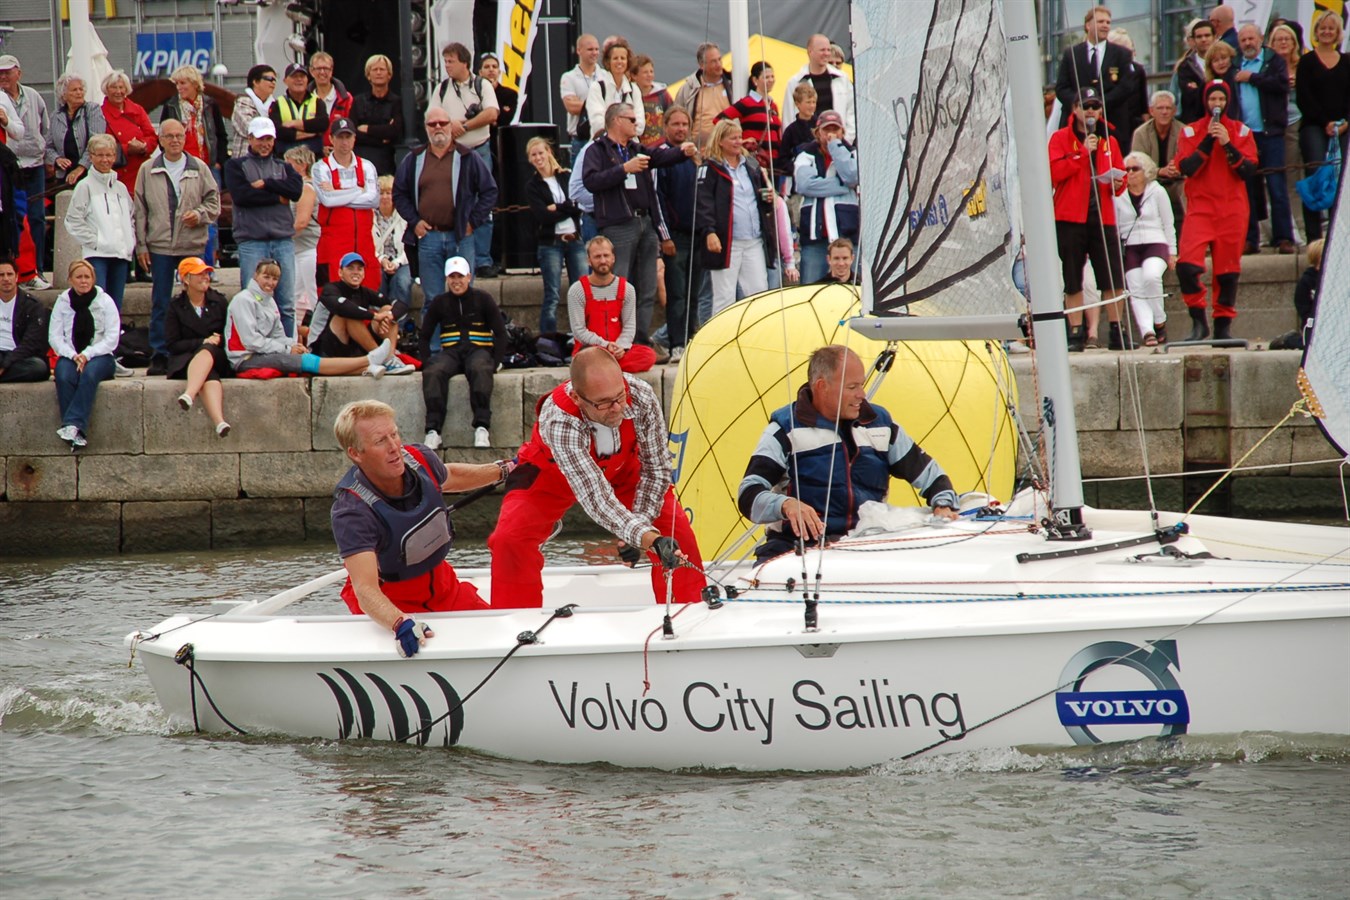 Volvo City Sailing - Oslo